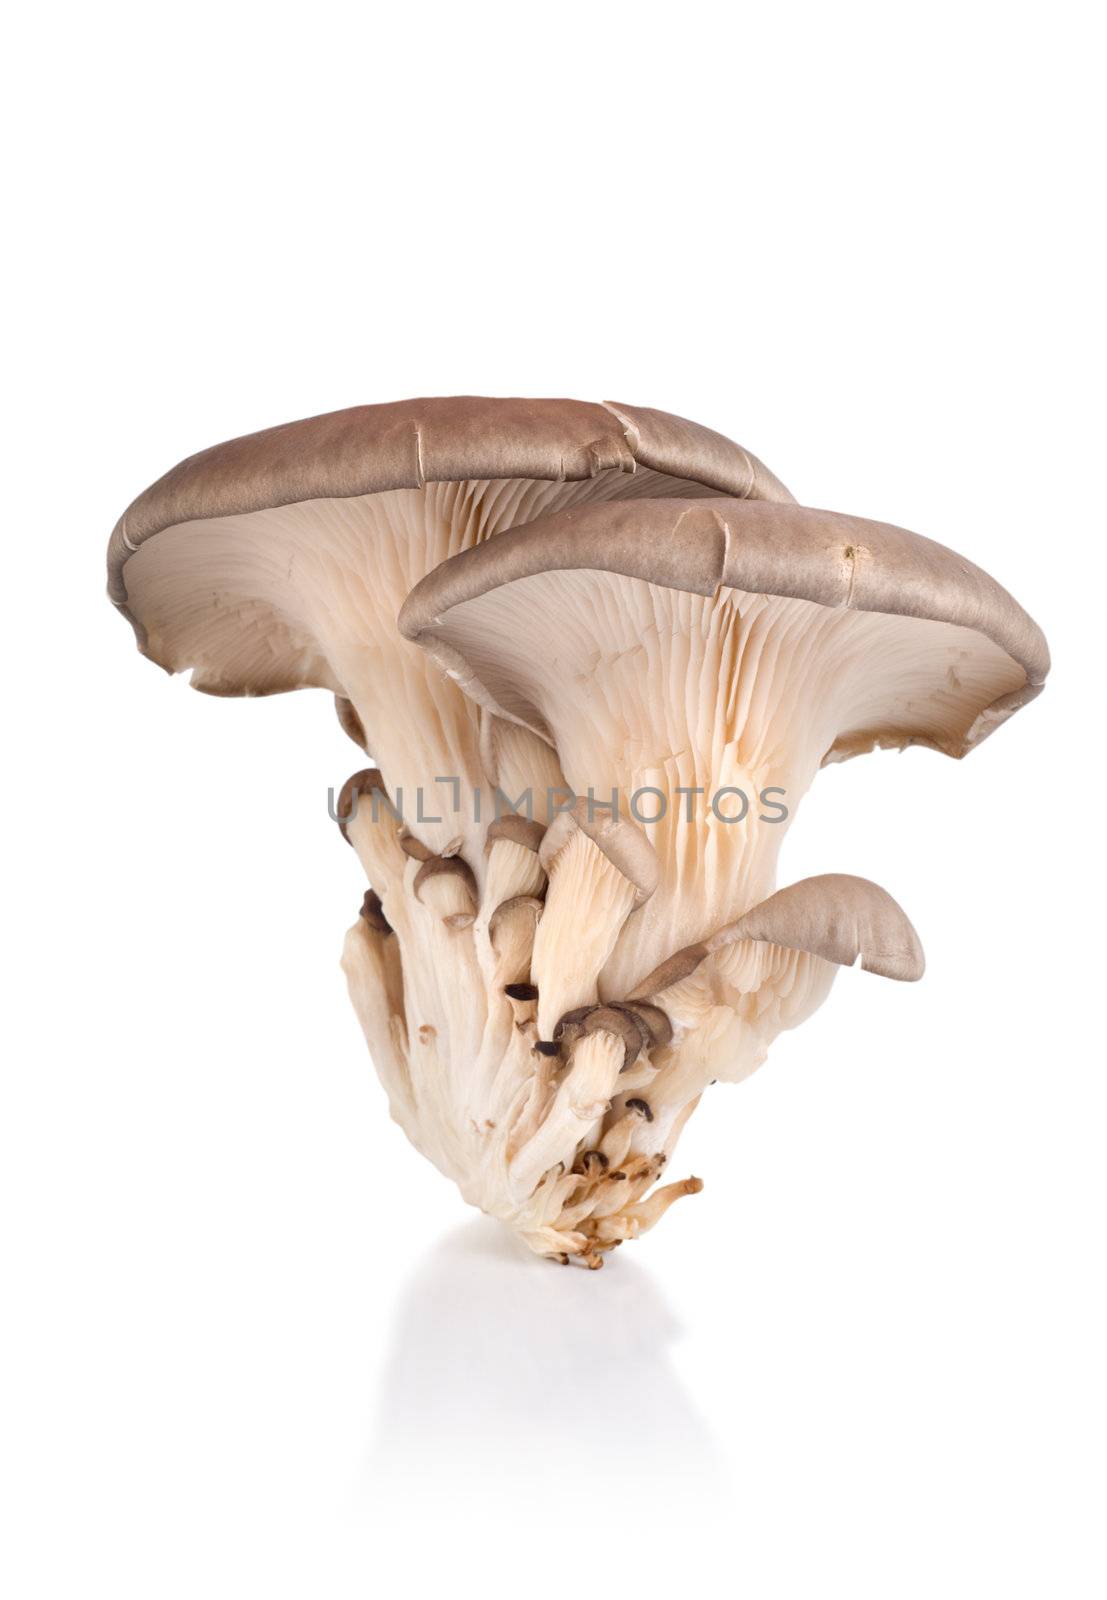 Oyster mushroom by Givaga